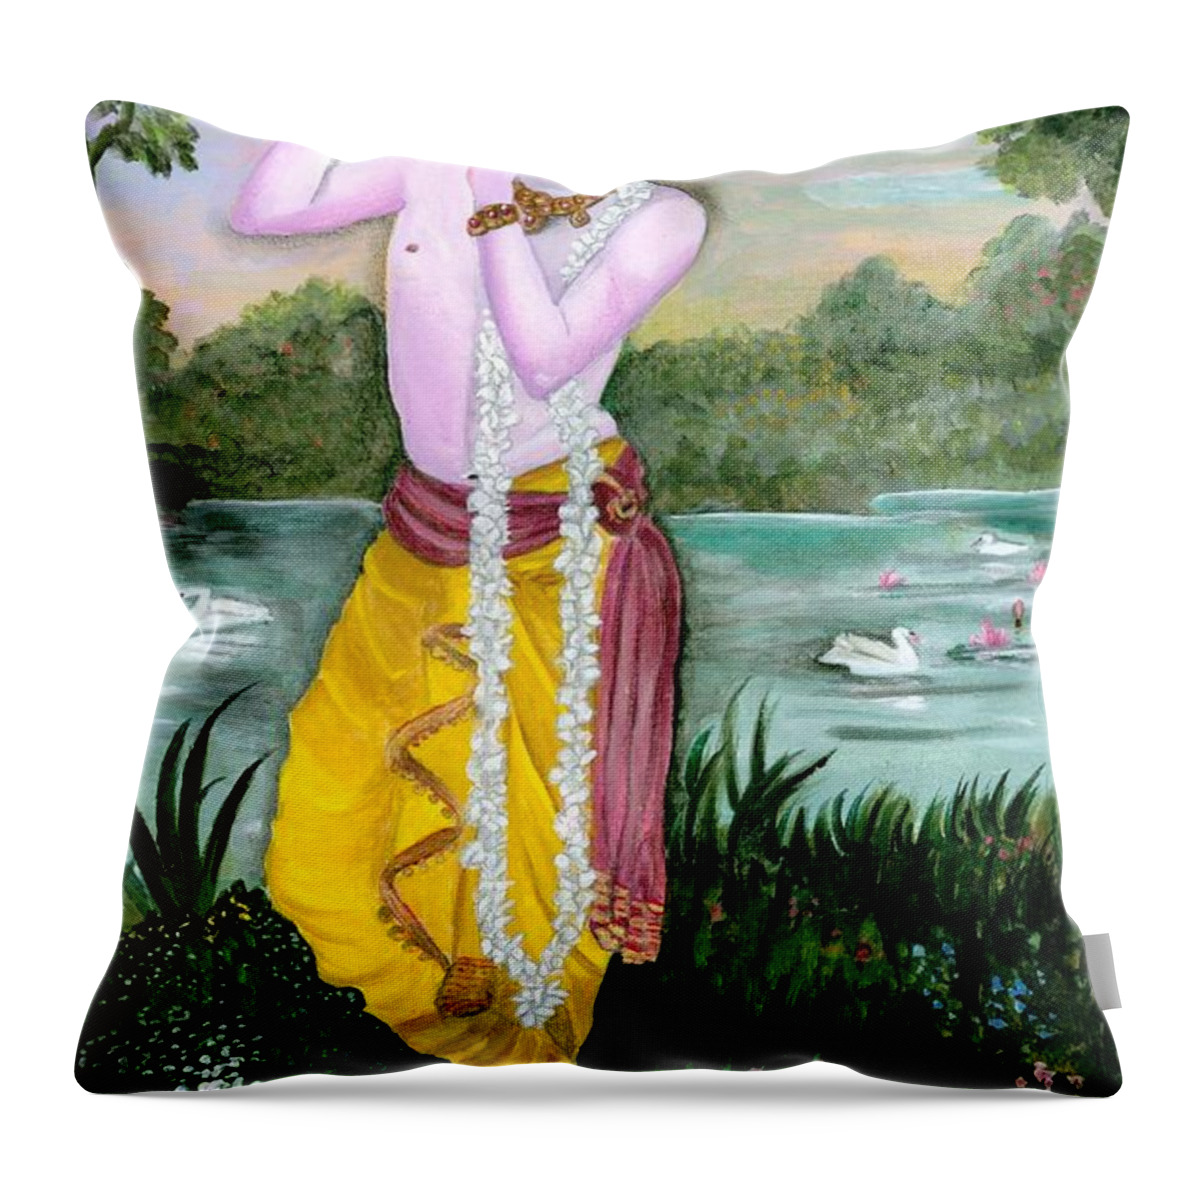 Krishna Throw Pillow featuring the painting The divine flute player, Sri Krishna by Tara Krishna